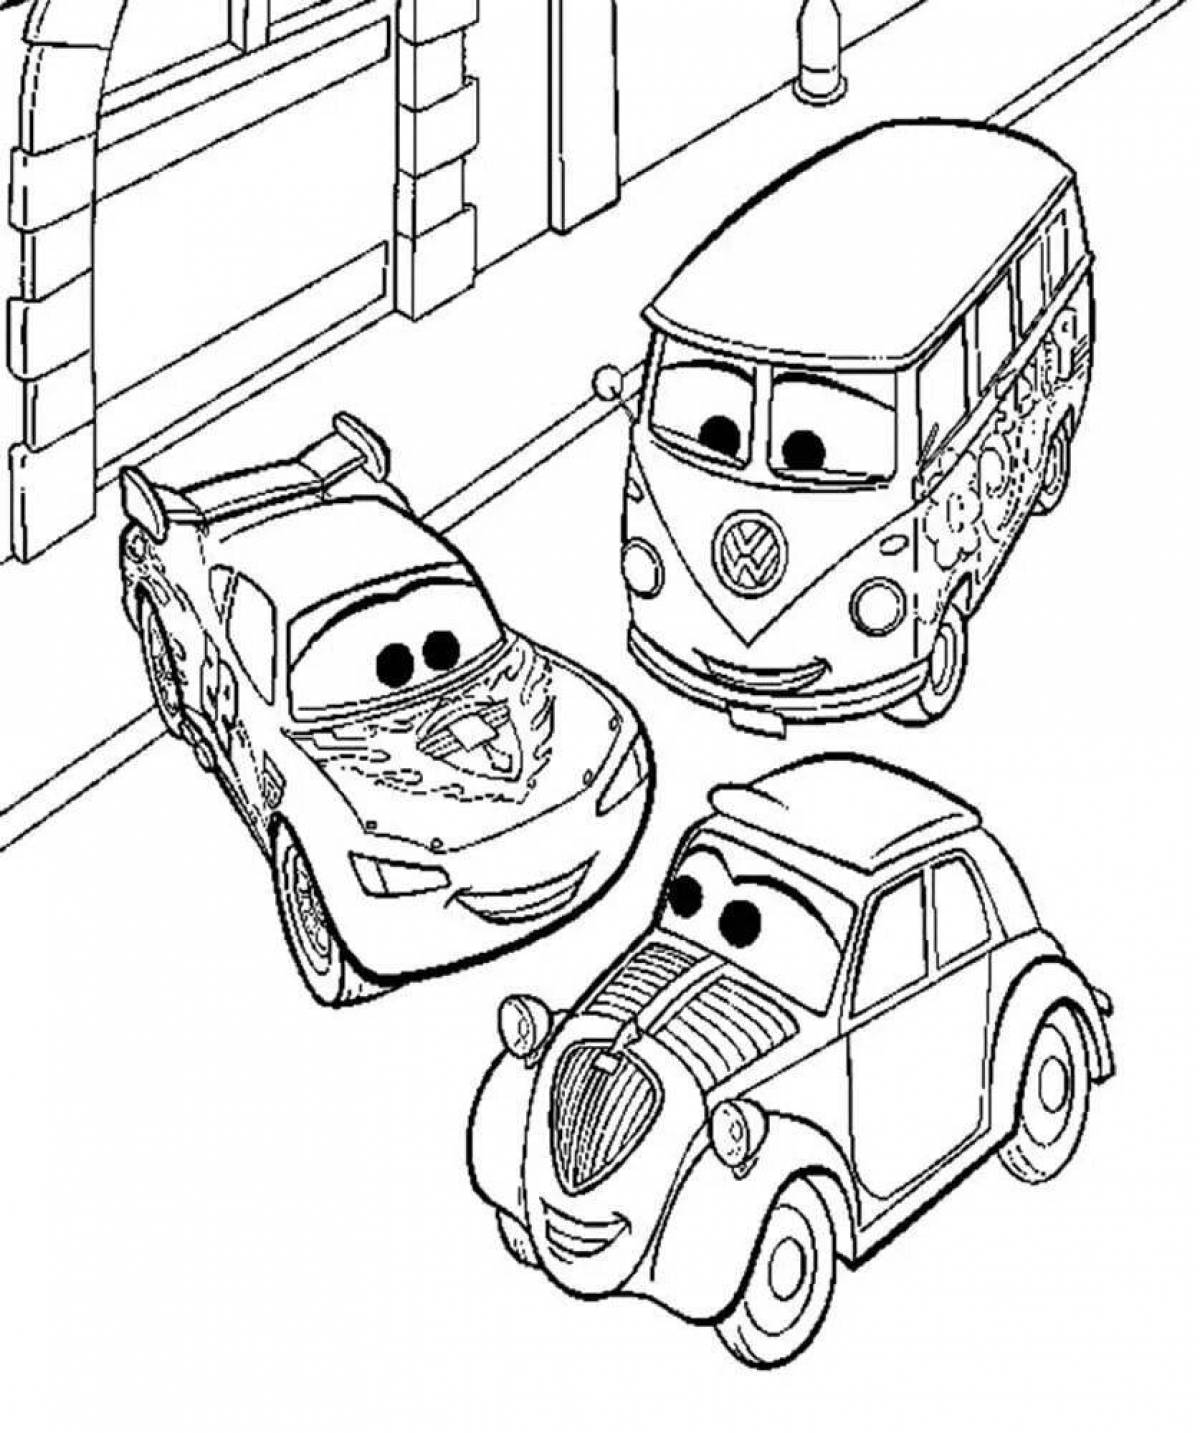 Cool cartoon cars coloring book